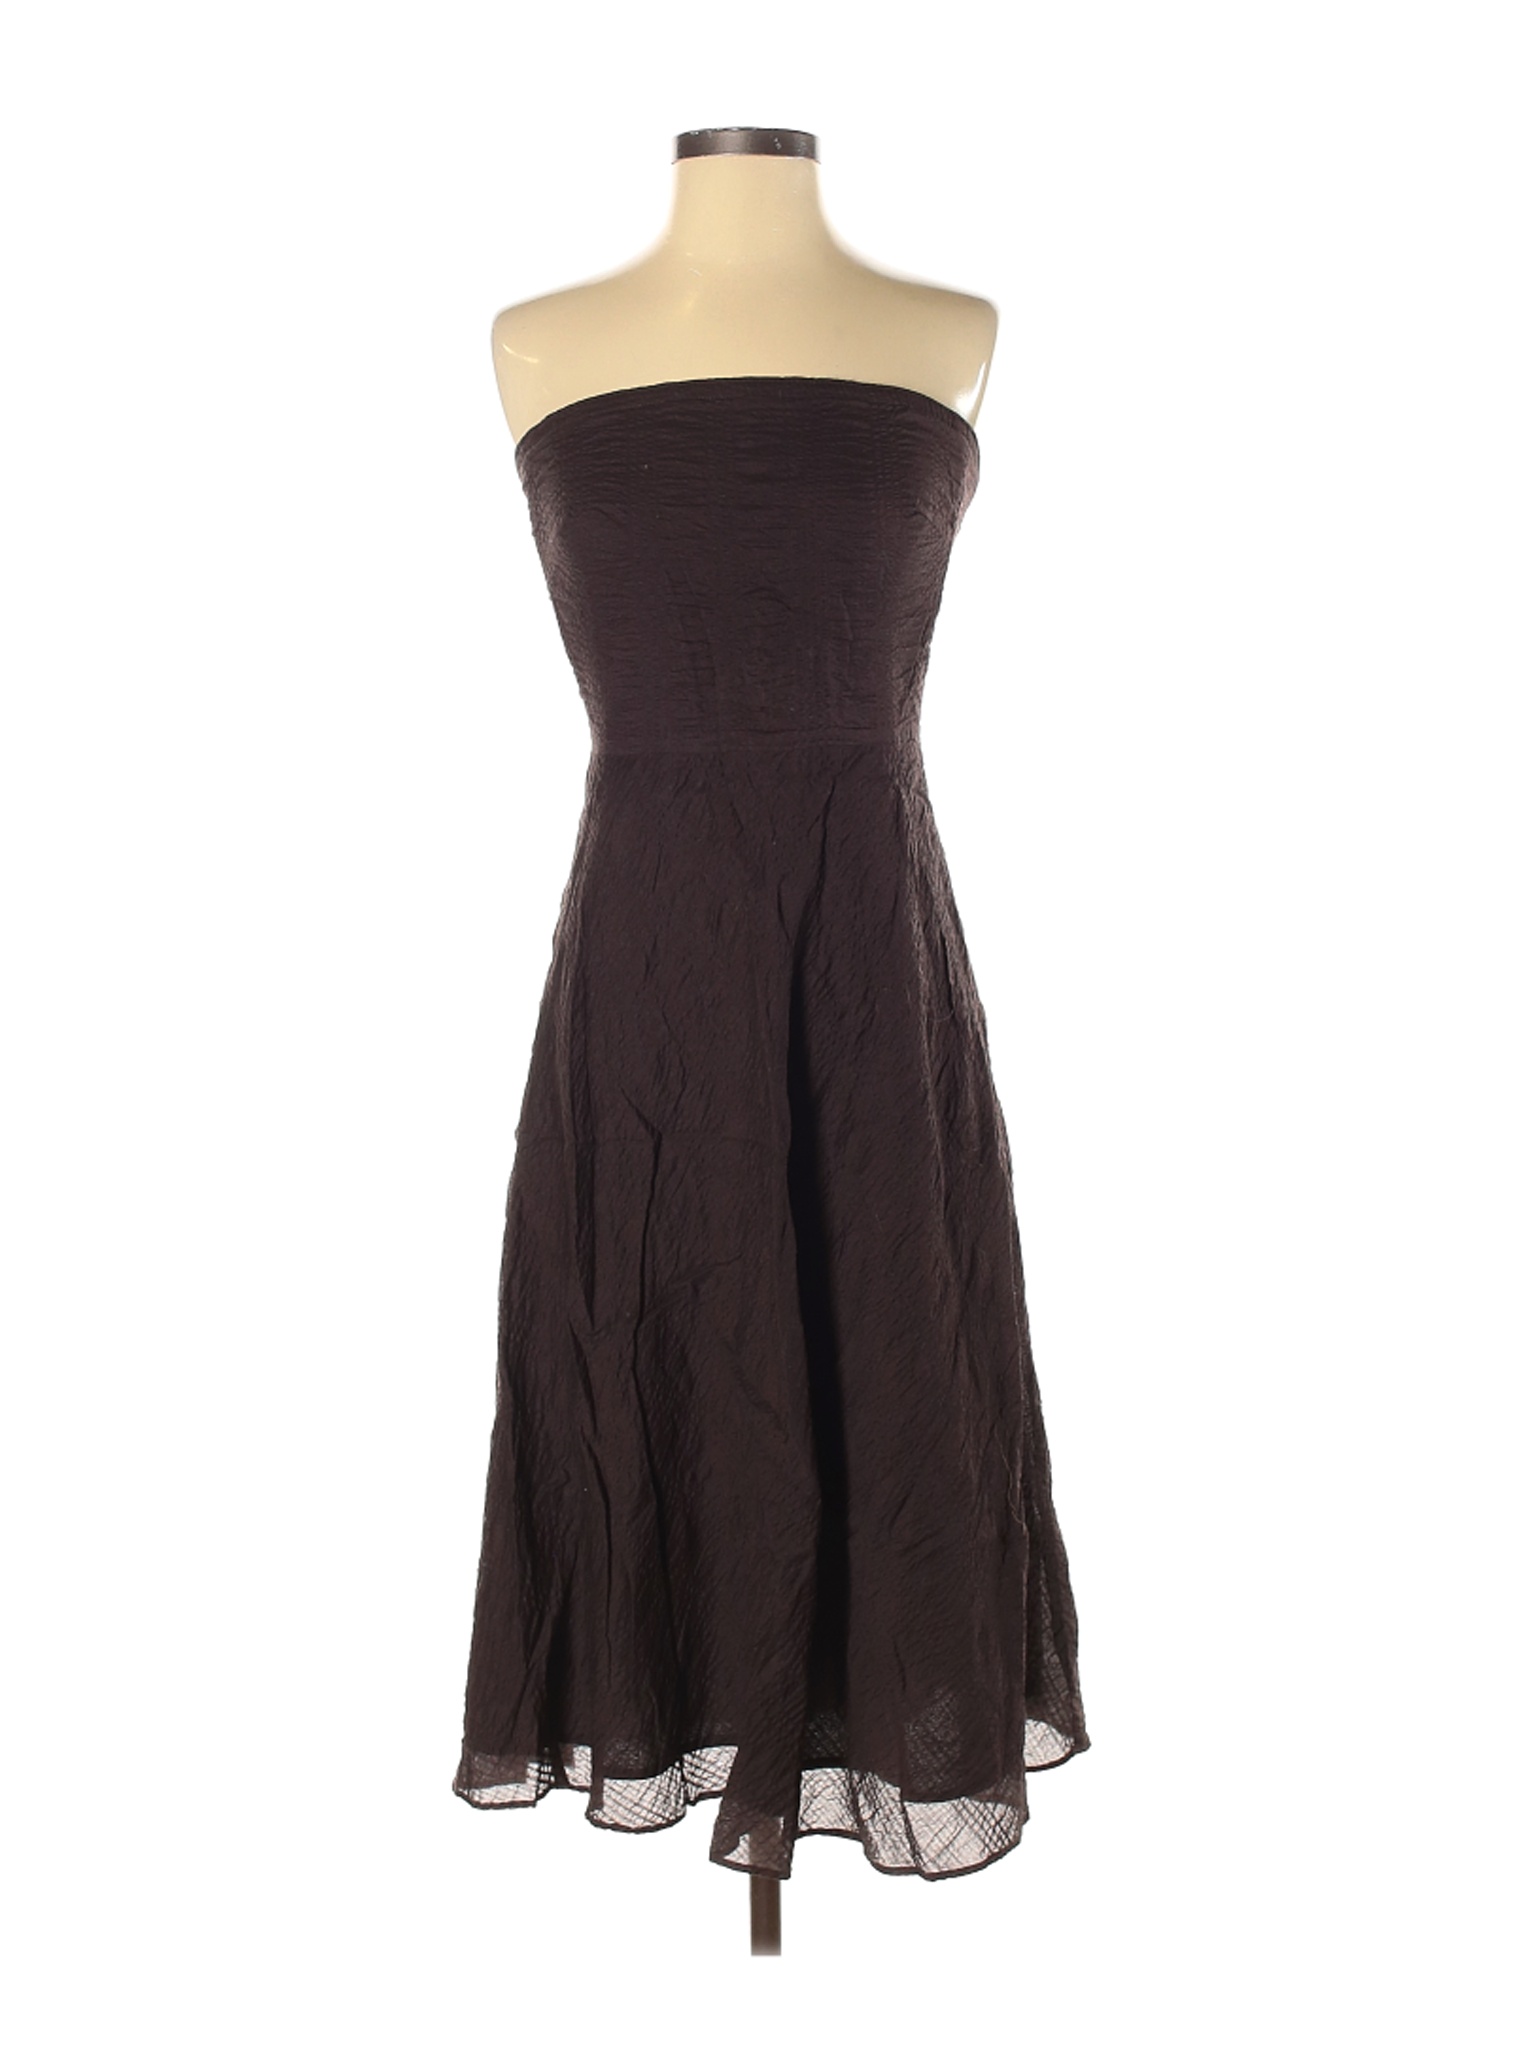 J.Crew Women Brown Cocktail Dress 4 | eBay